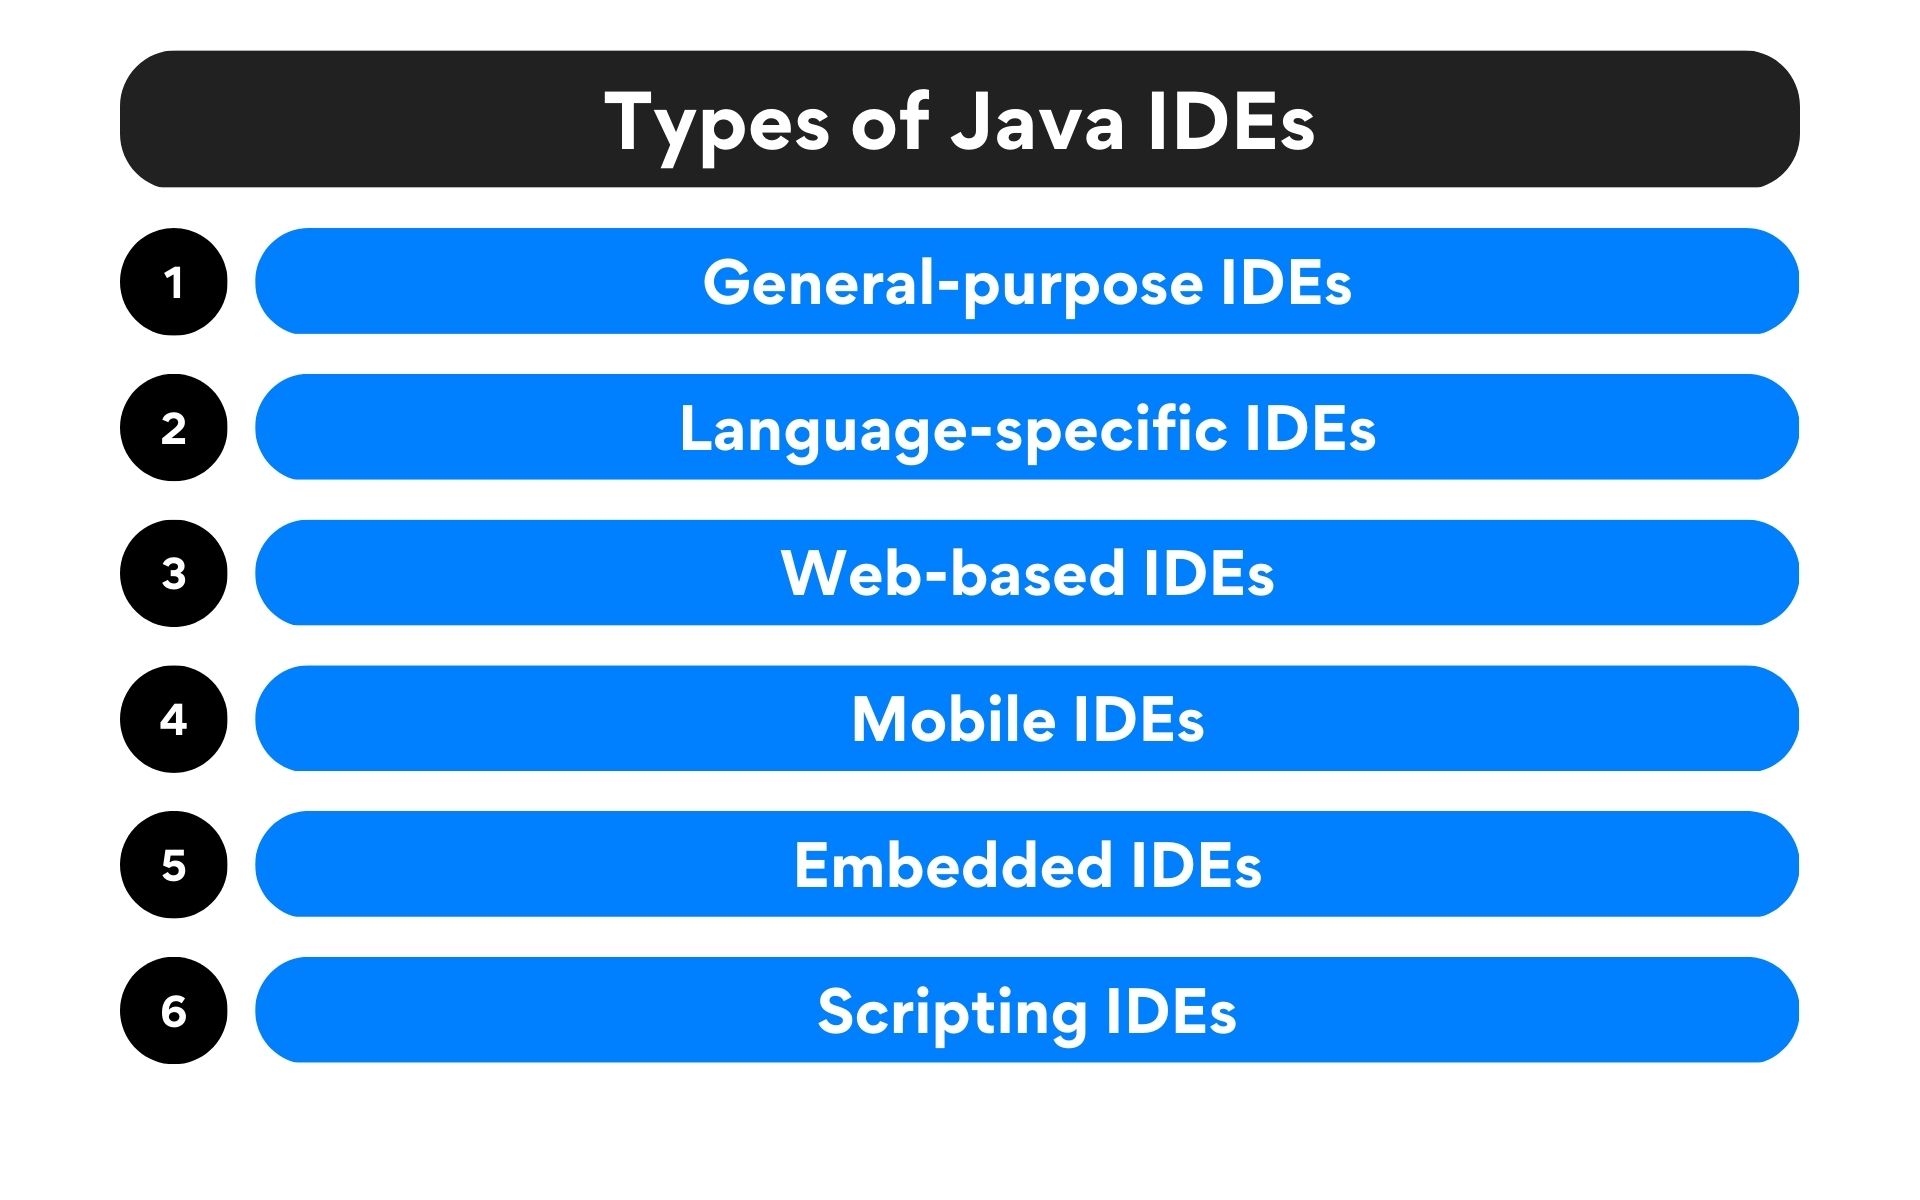 6 types of Java IDEs